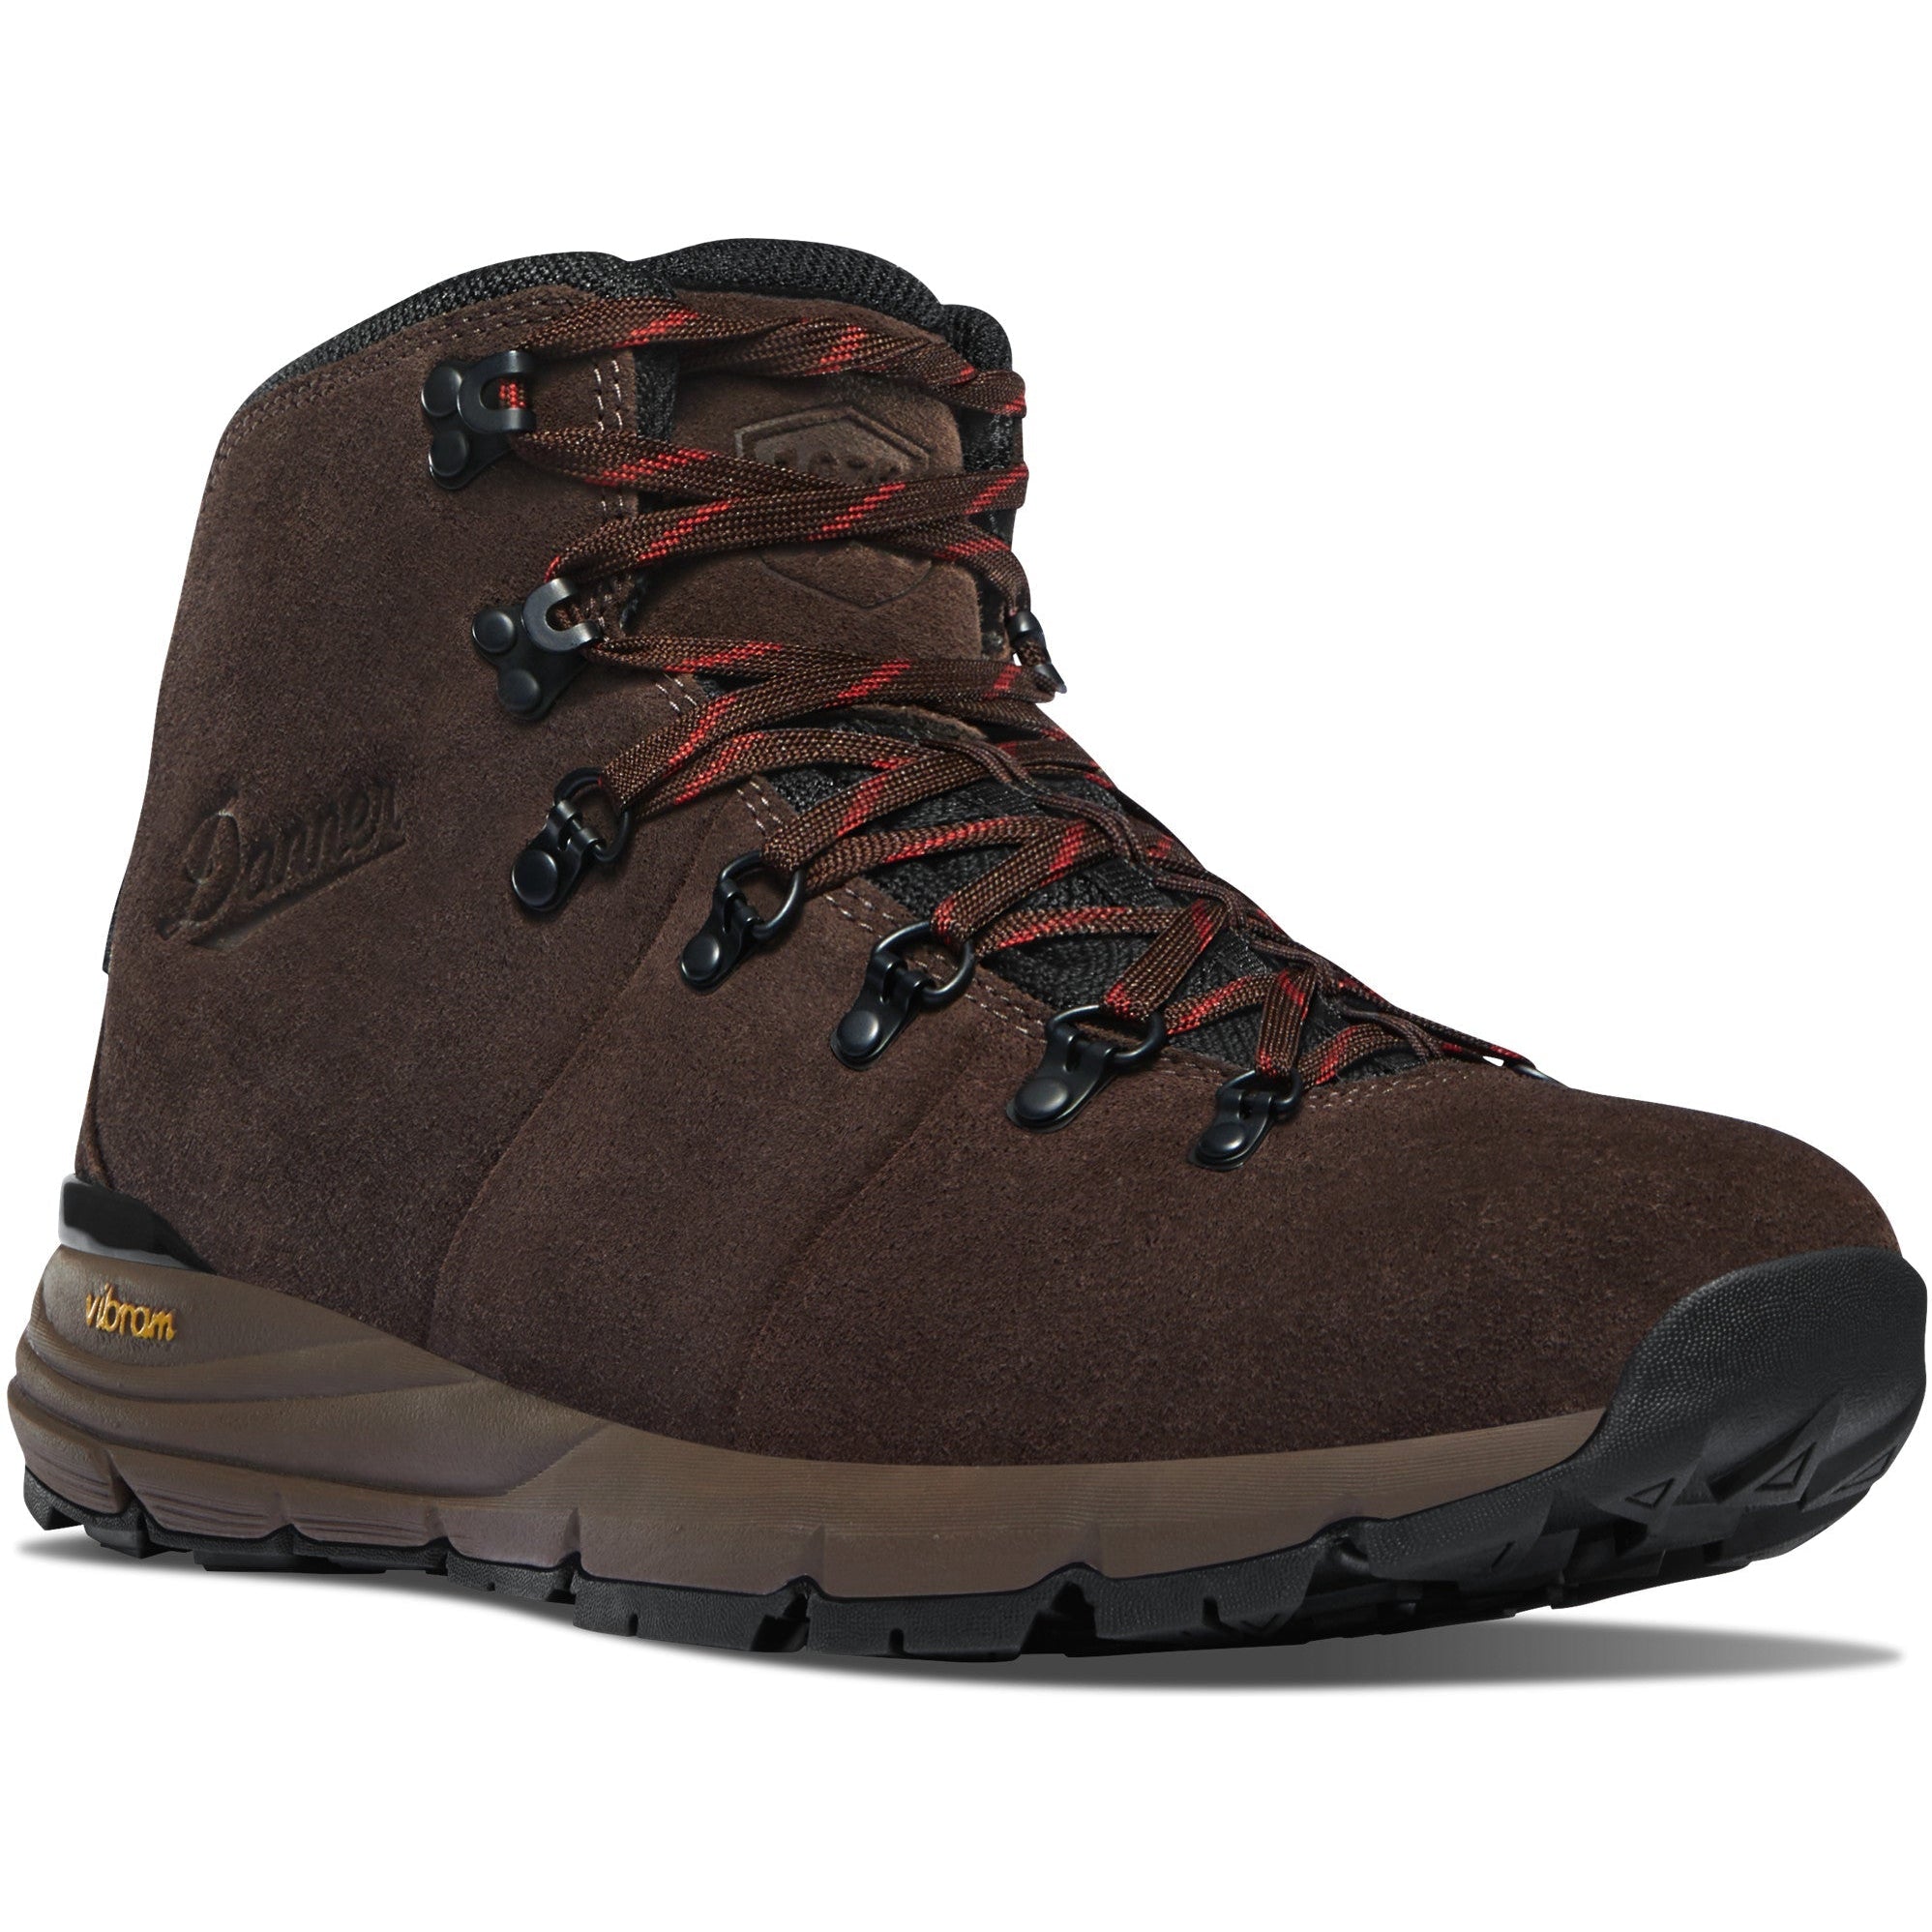 Danner Men's Mountain 600 4.5" WP Hiking Boot- Java/Bossa Nova - 36233 7 / Medium / Java/Bossa Nova - Overlook Boots